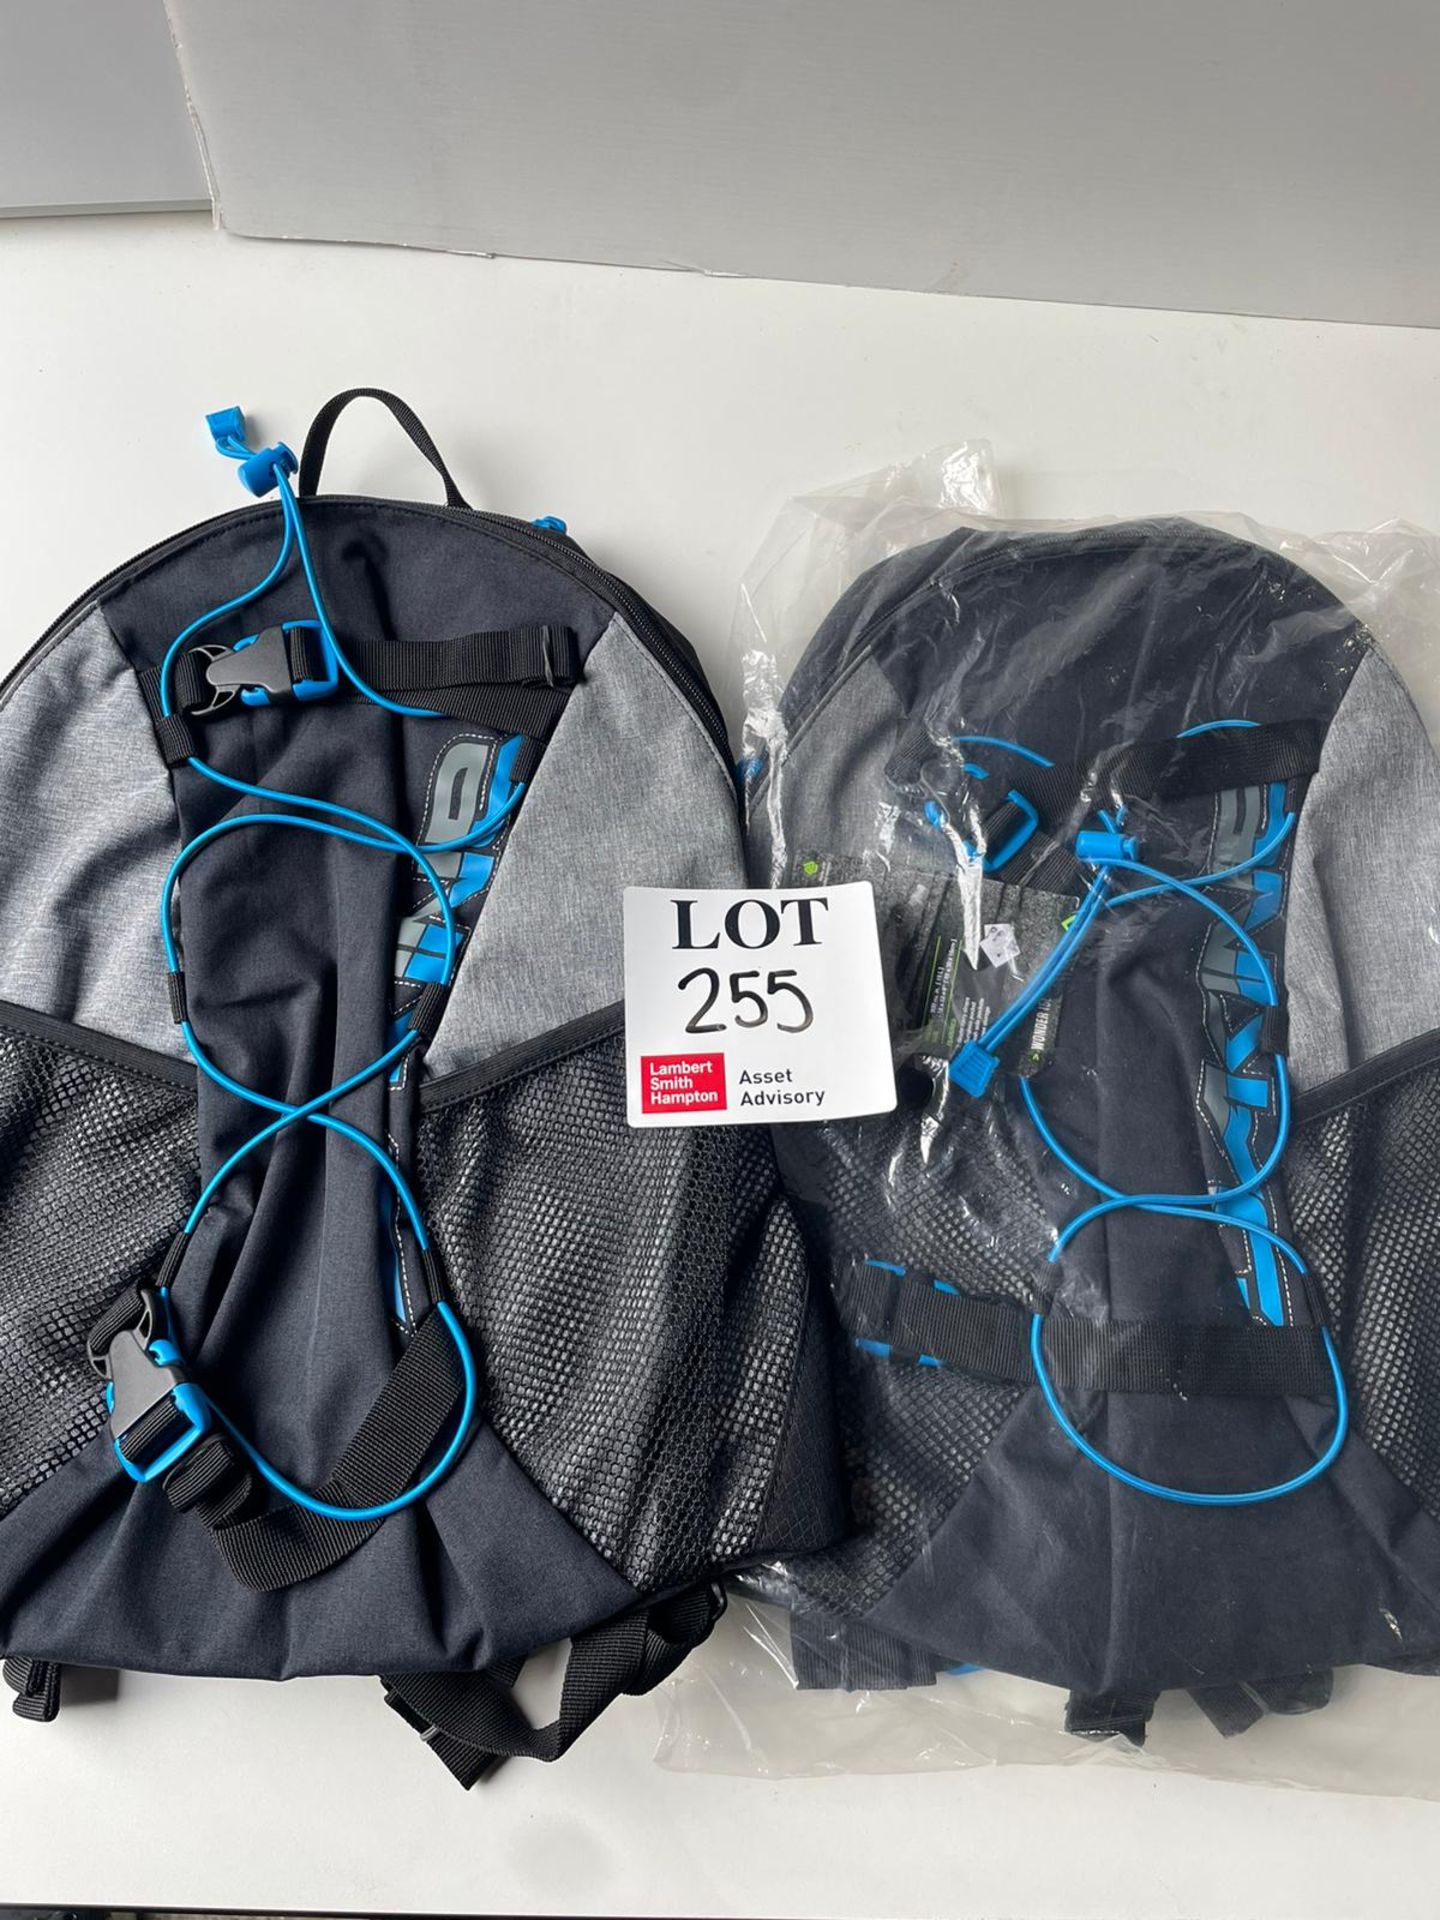 Two Dakine backpacks and cool bag